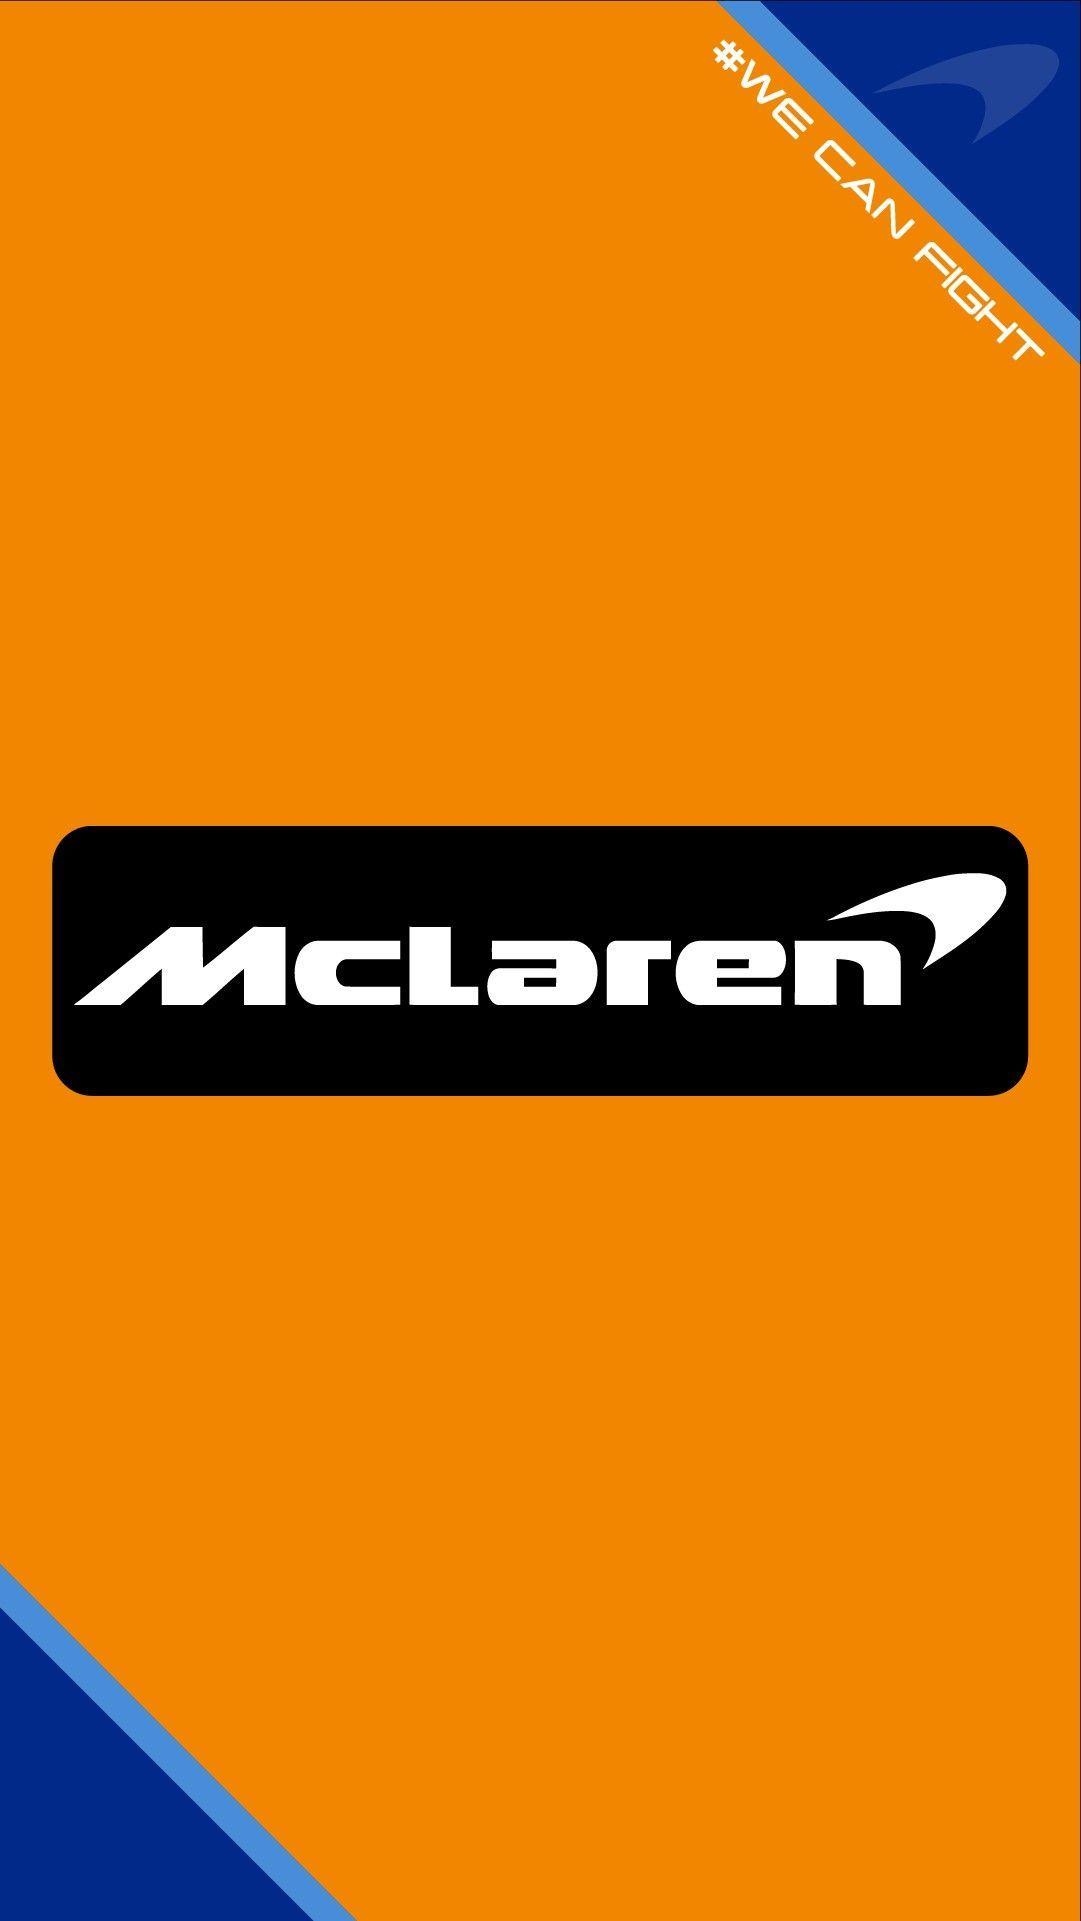 McLaren Racing Logo - Mclaren 2019 We can fight | Graphic T-Shirt | Logos | Pinterest ...